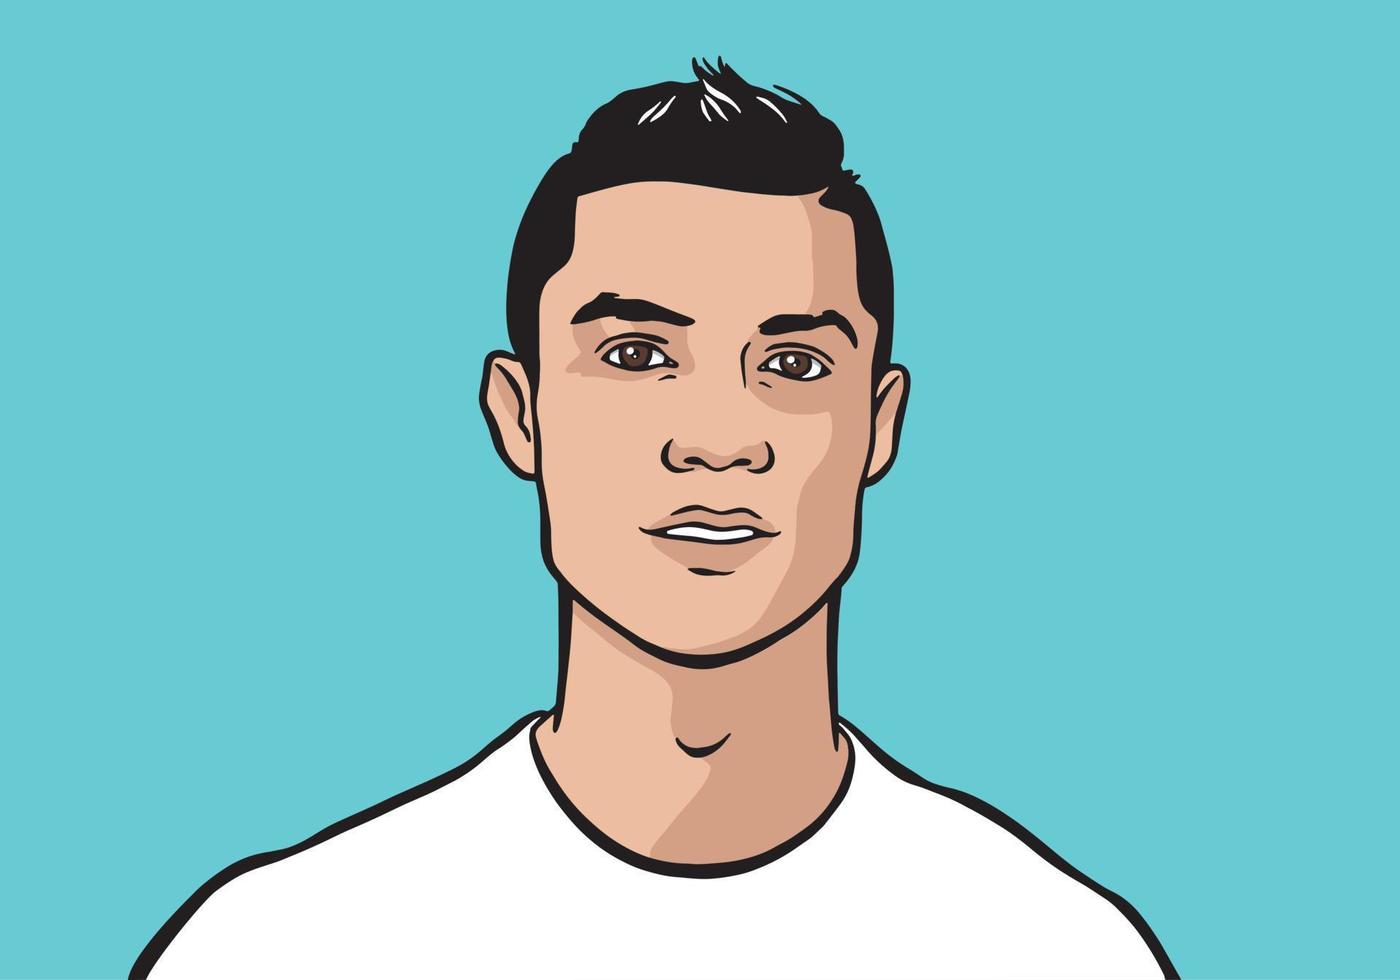 Portugees voetballer Cristiano van ronaldo vector portret illustratie